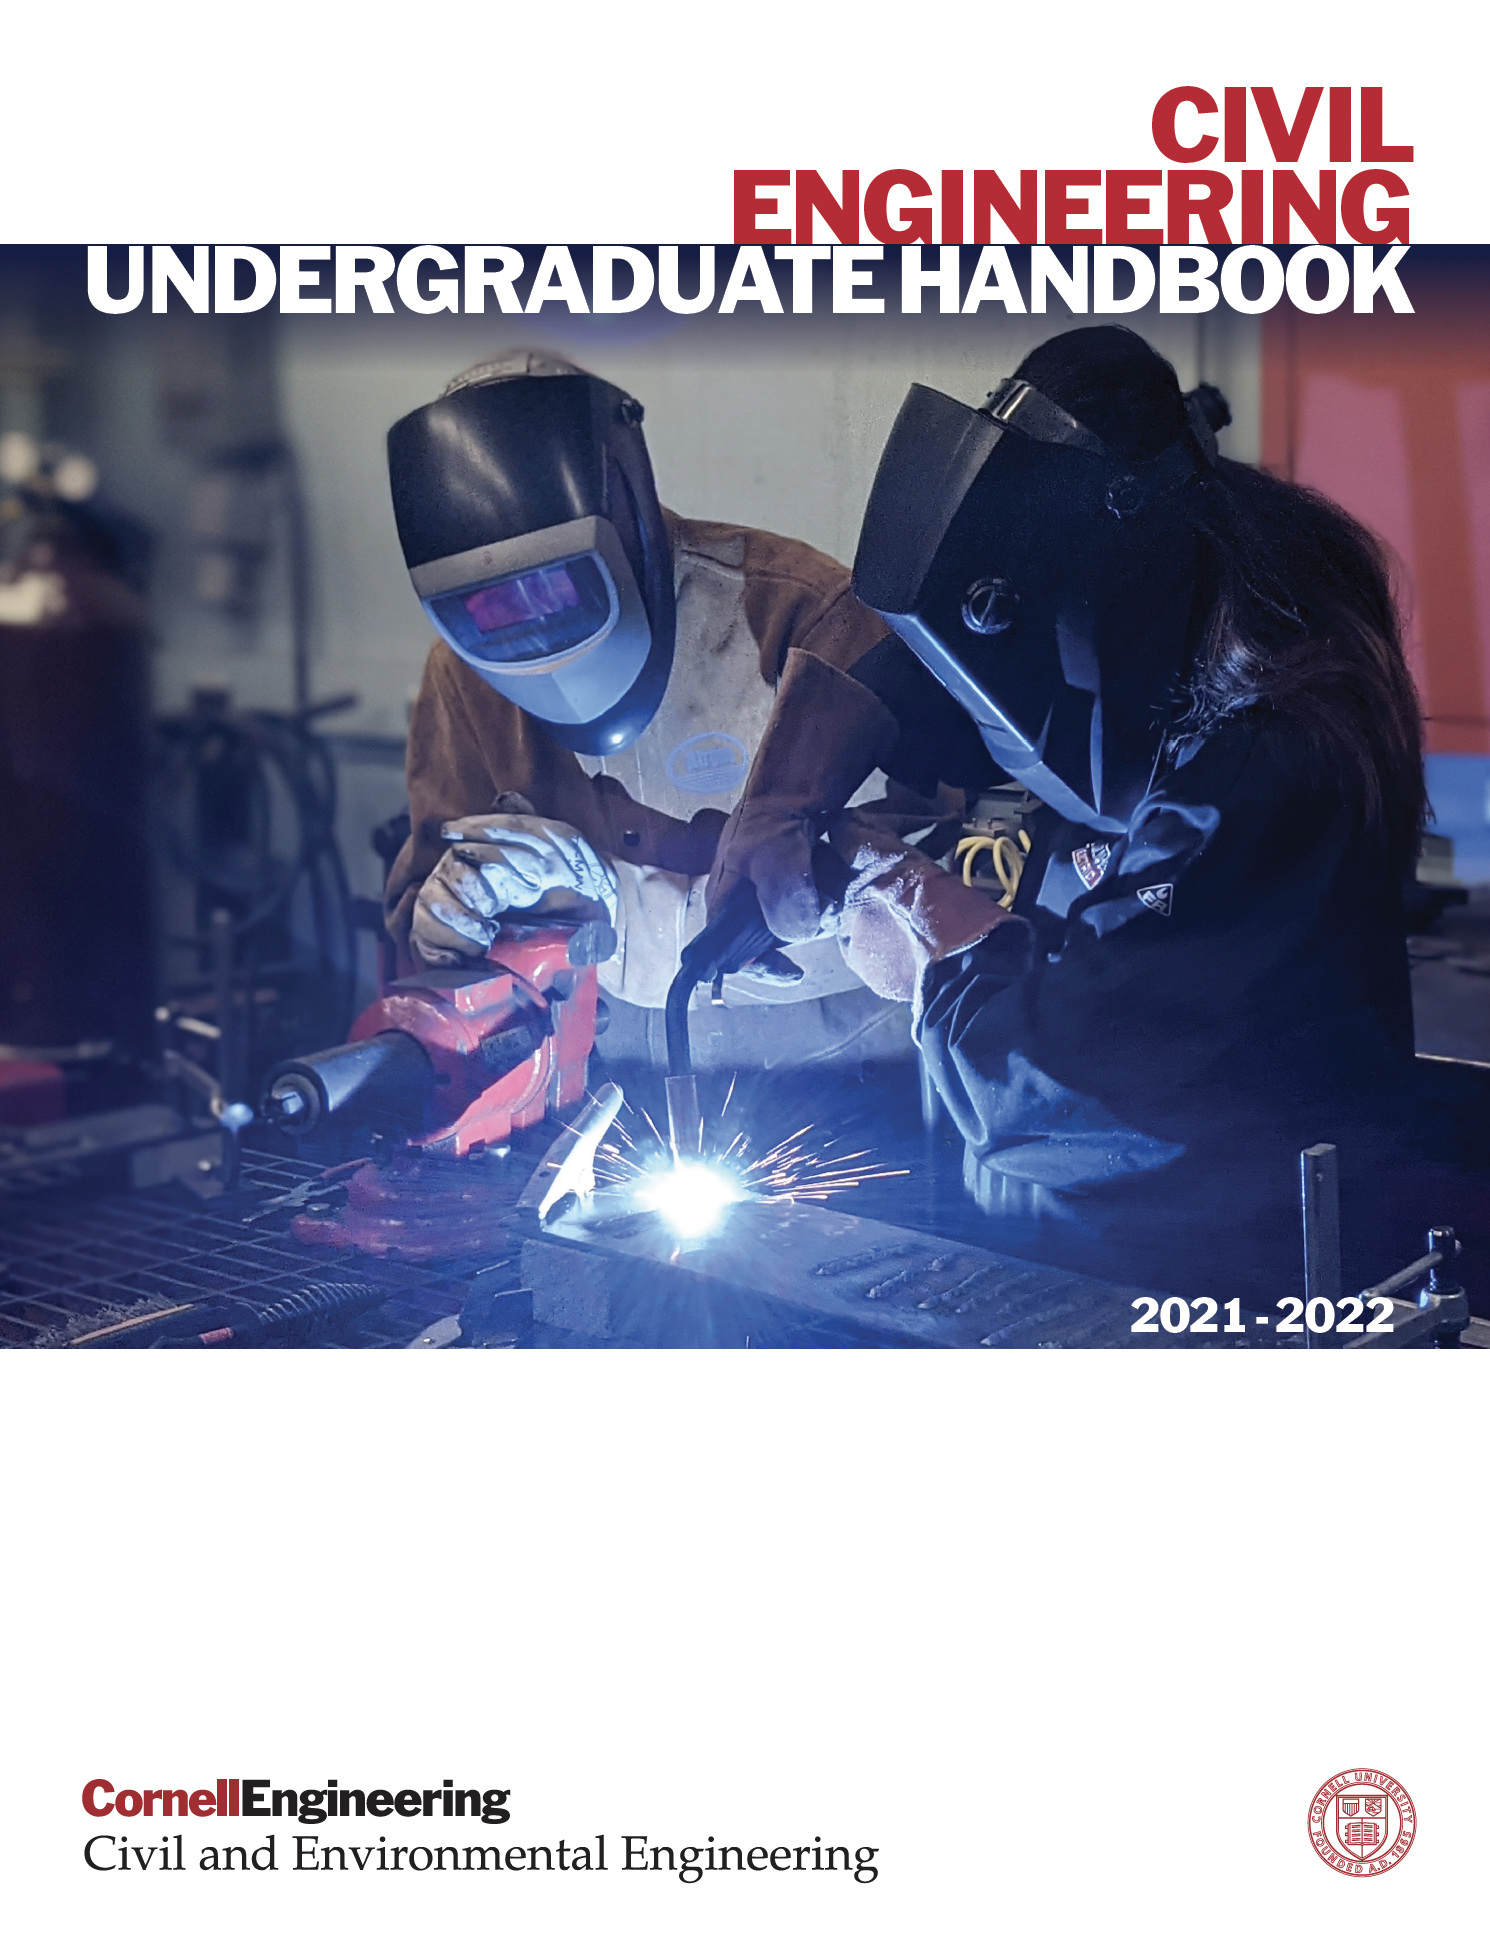 Civil Engineering Undergraduate Handbook cover with two people welding